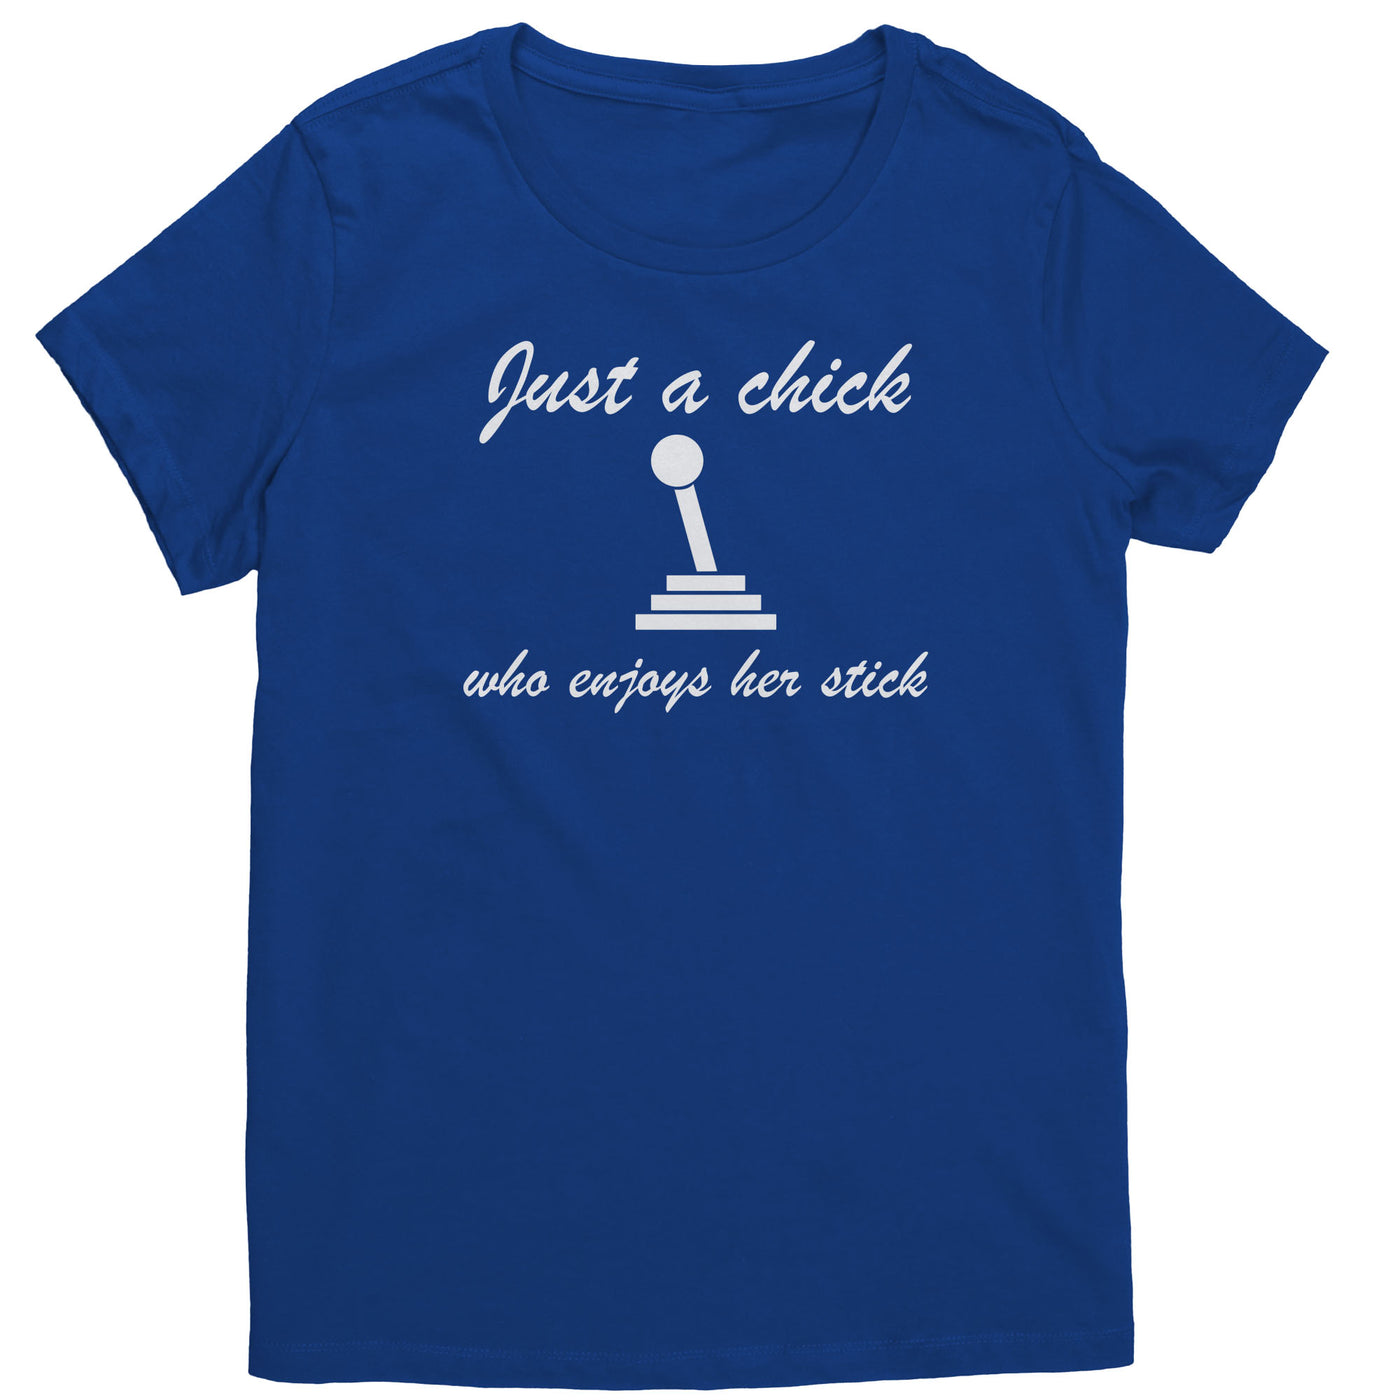 just-a-chick-who-enjoys-her-stick-shirt-blue